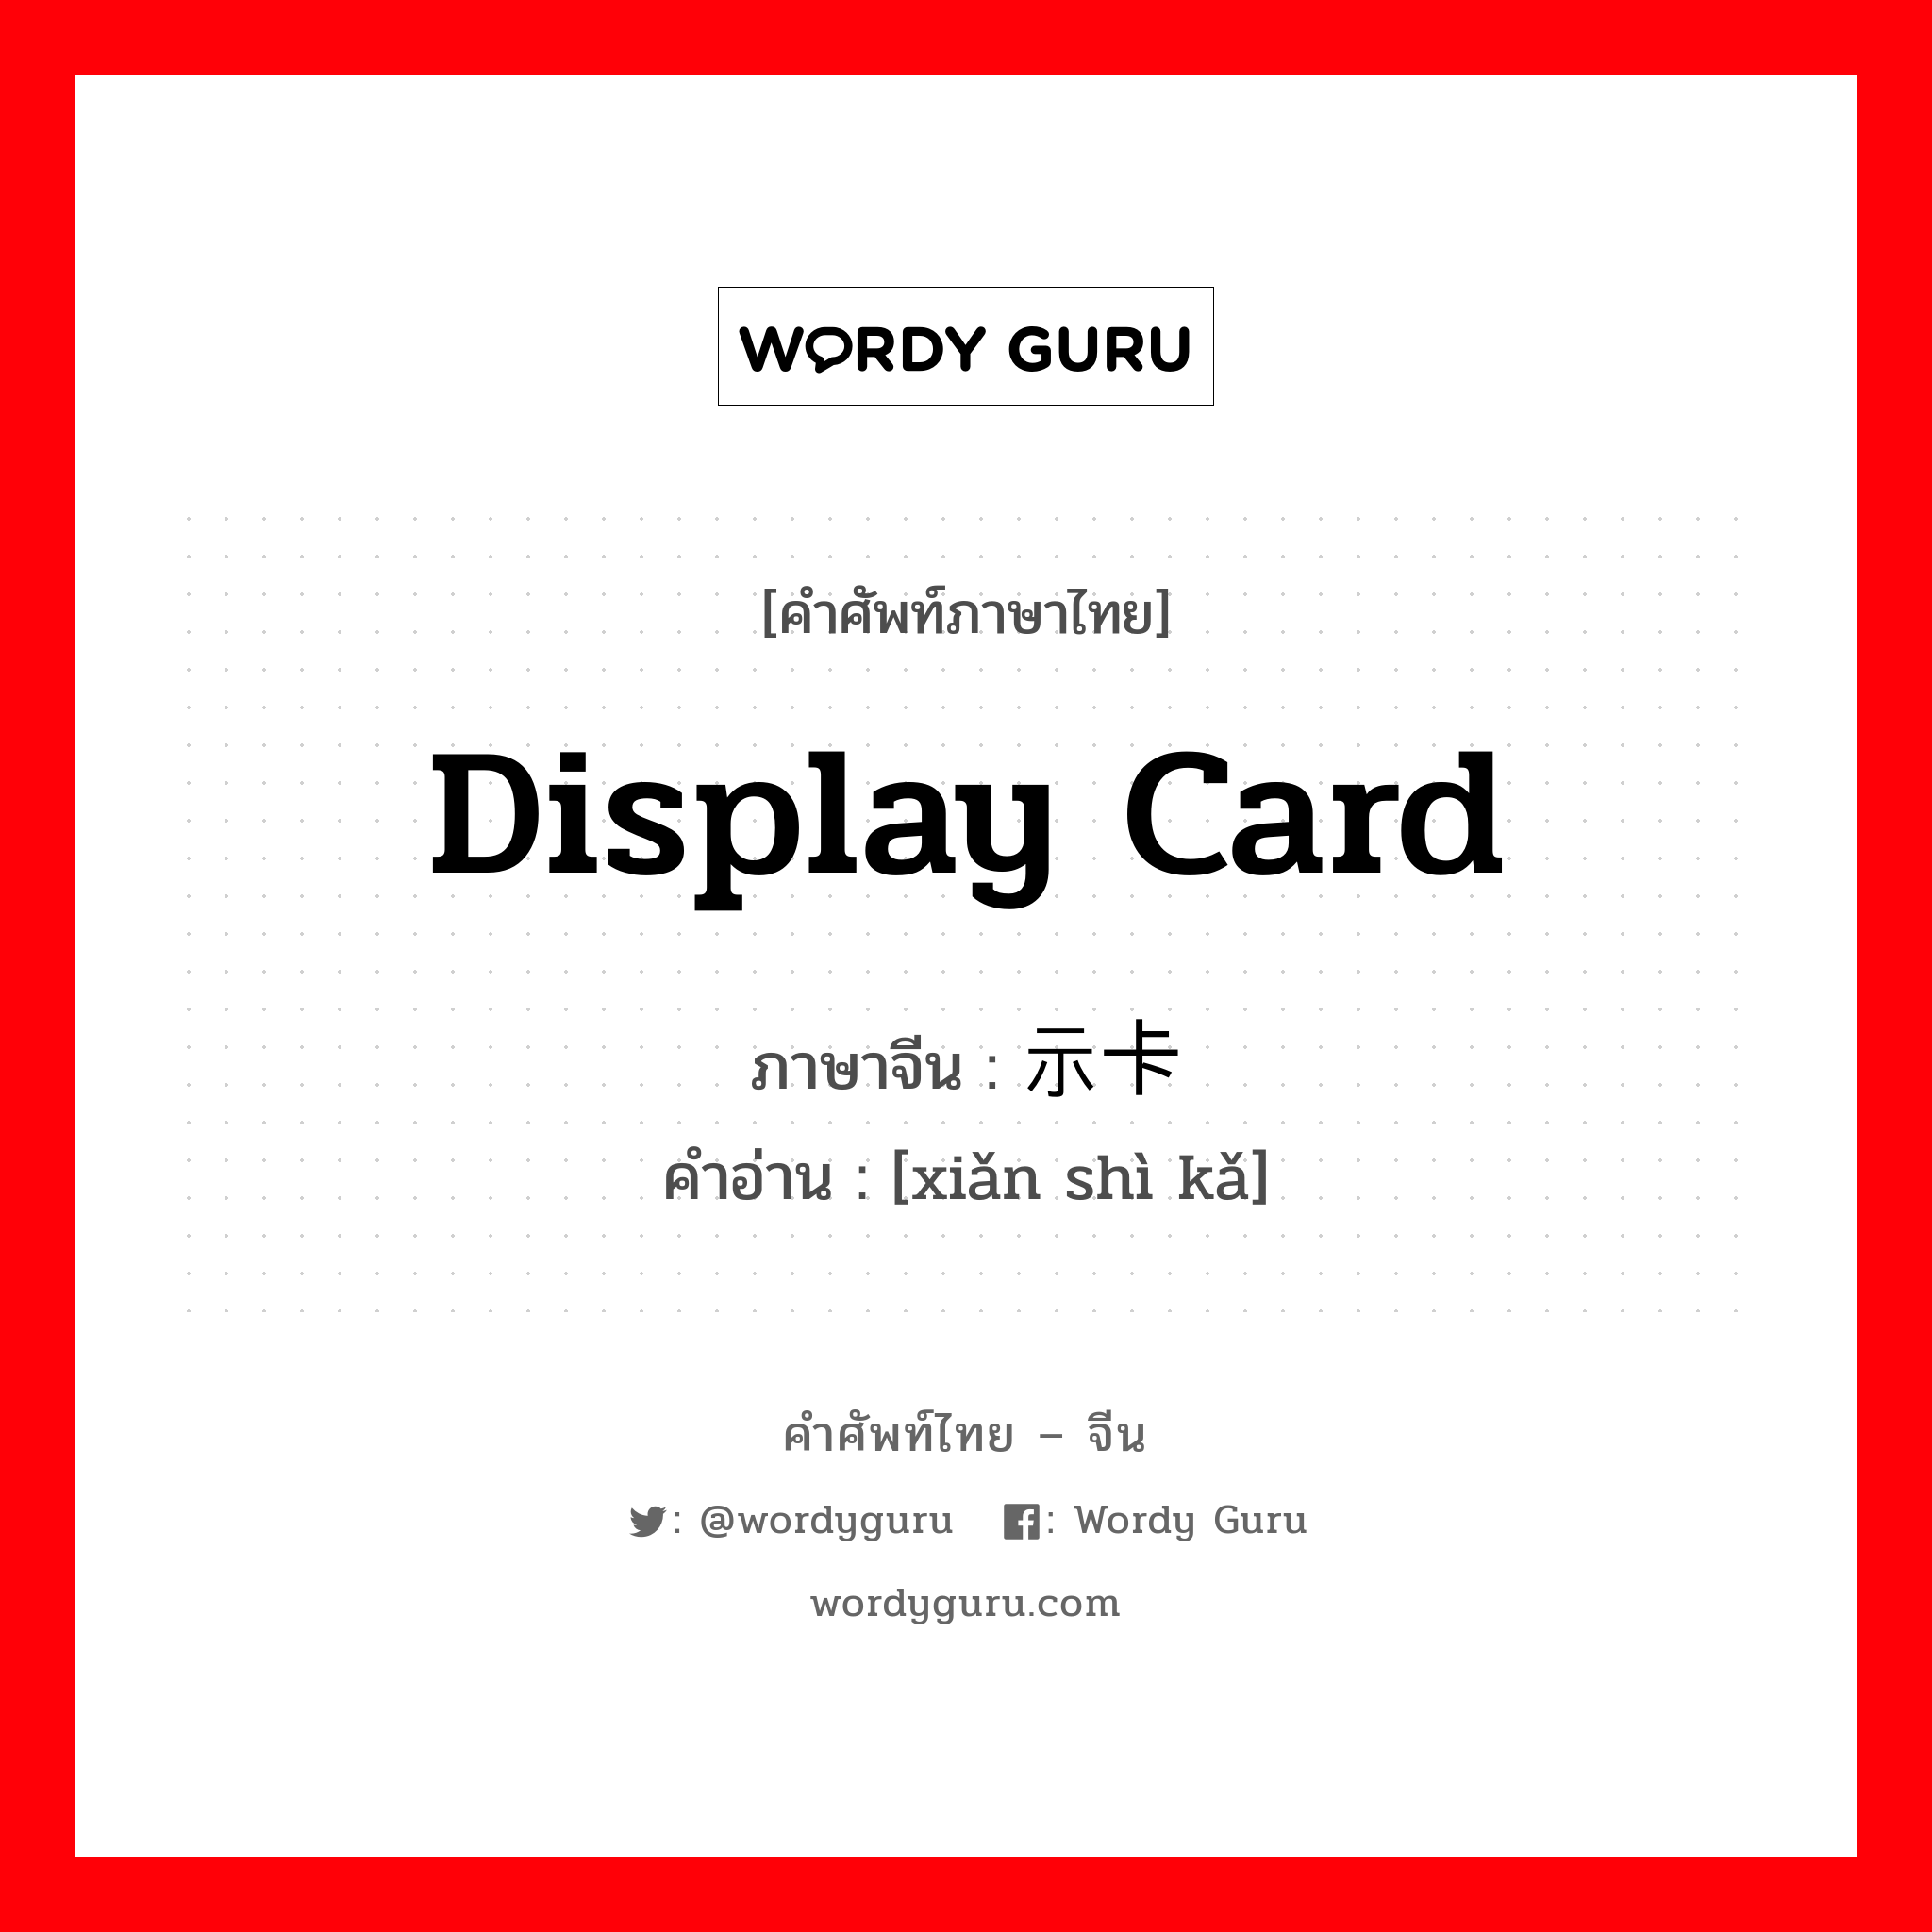 display card ภาษาจีนคืออะไร, คำศัพท์ภาษาไทย - จีน display card ภาษาจีน 显示卡 คำอ่าน [xiǎn shì kǎ]